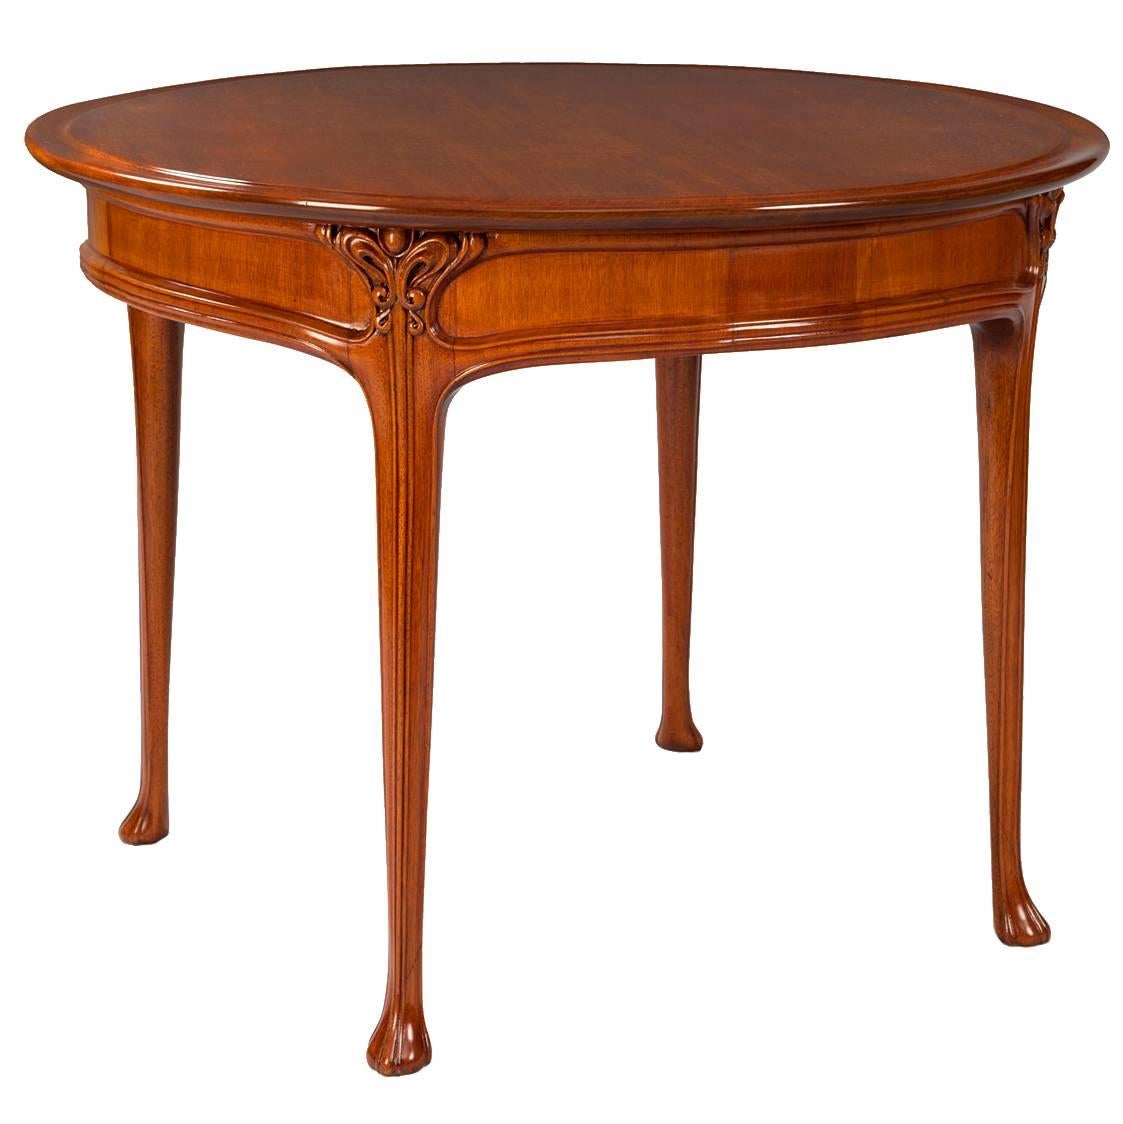 Edouard Colonna French Art Nouveau Side Table